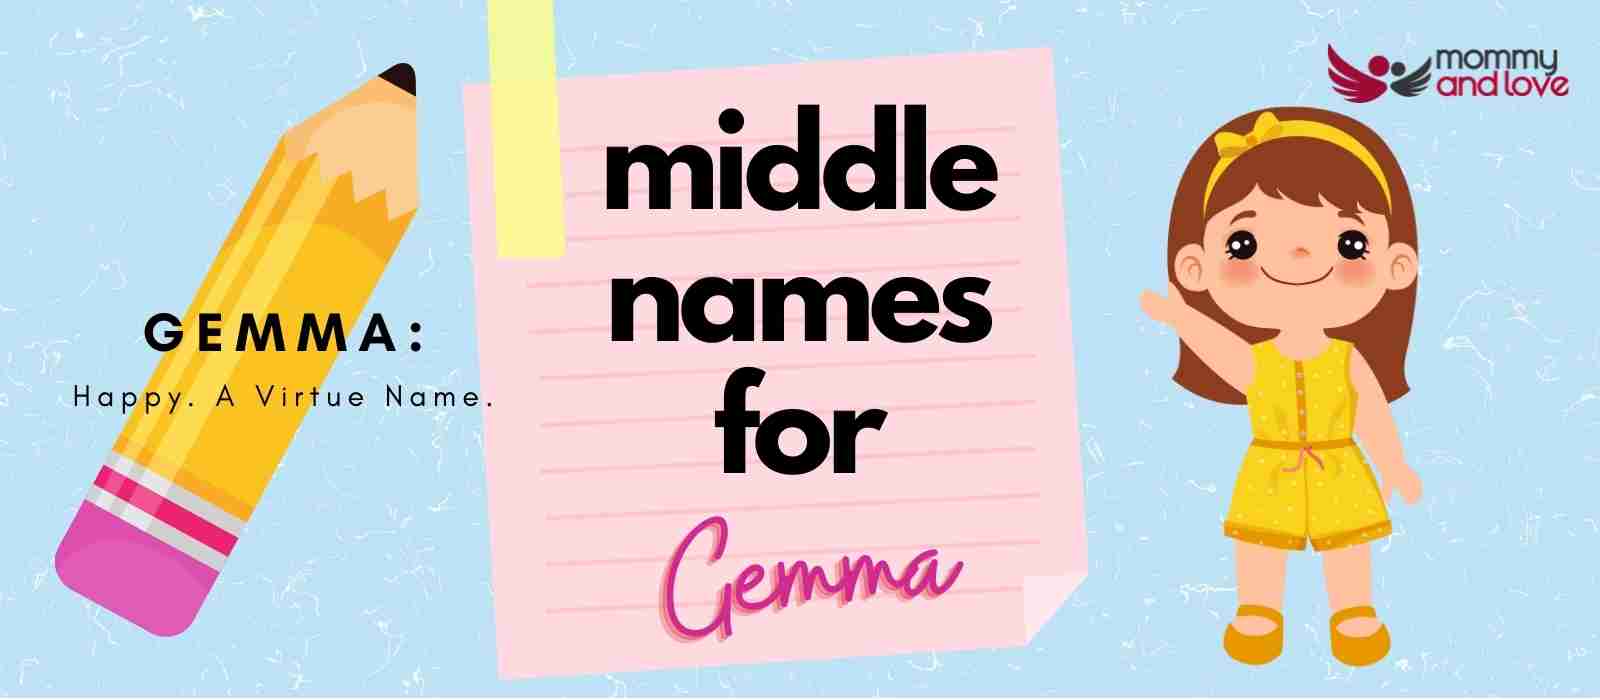 Middle Names for Gemma